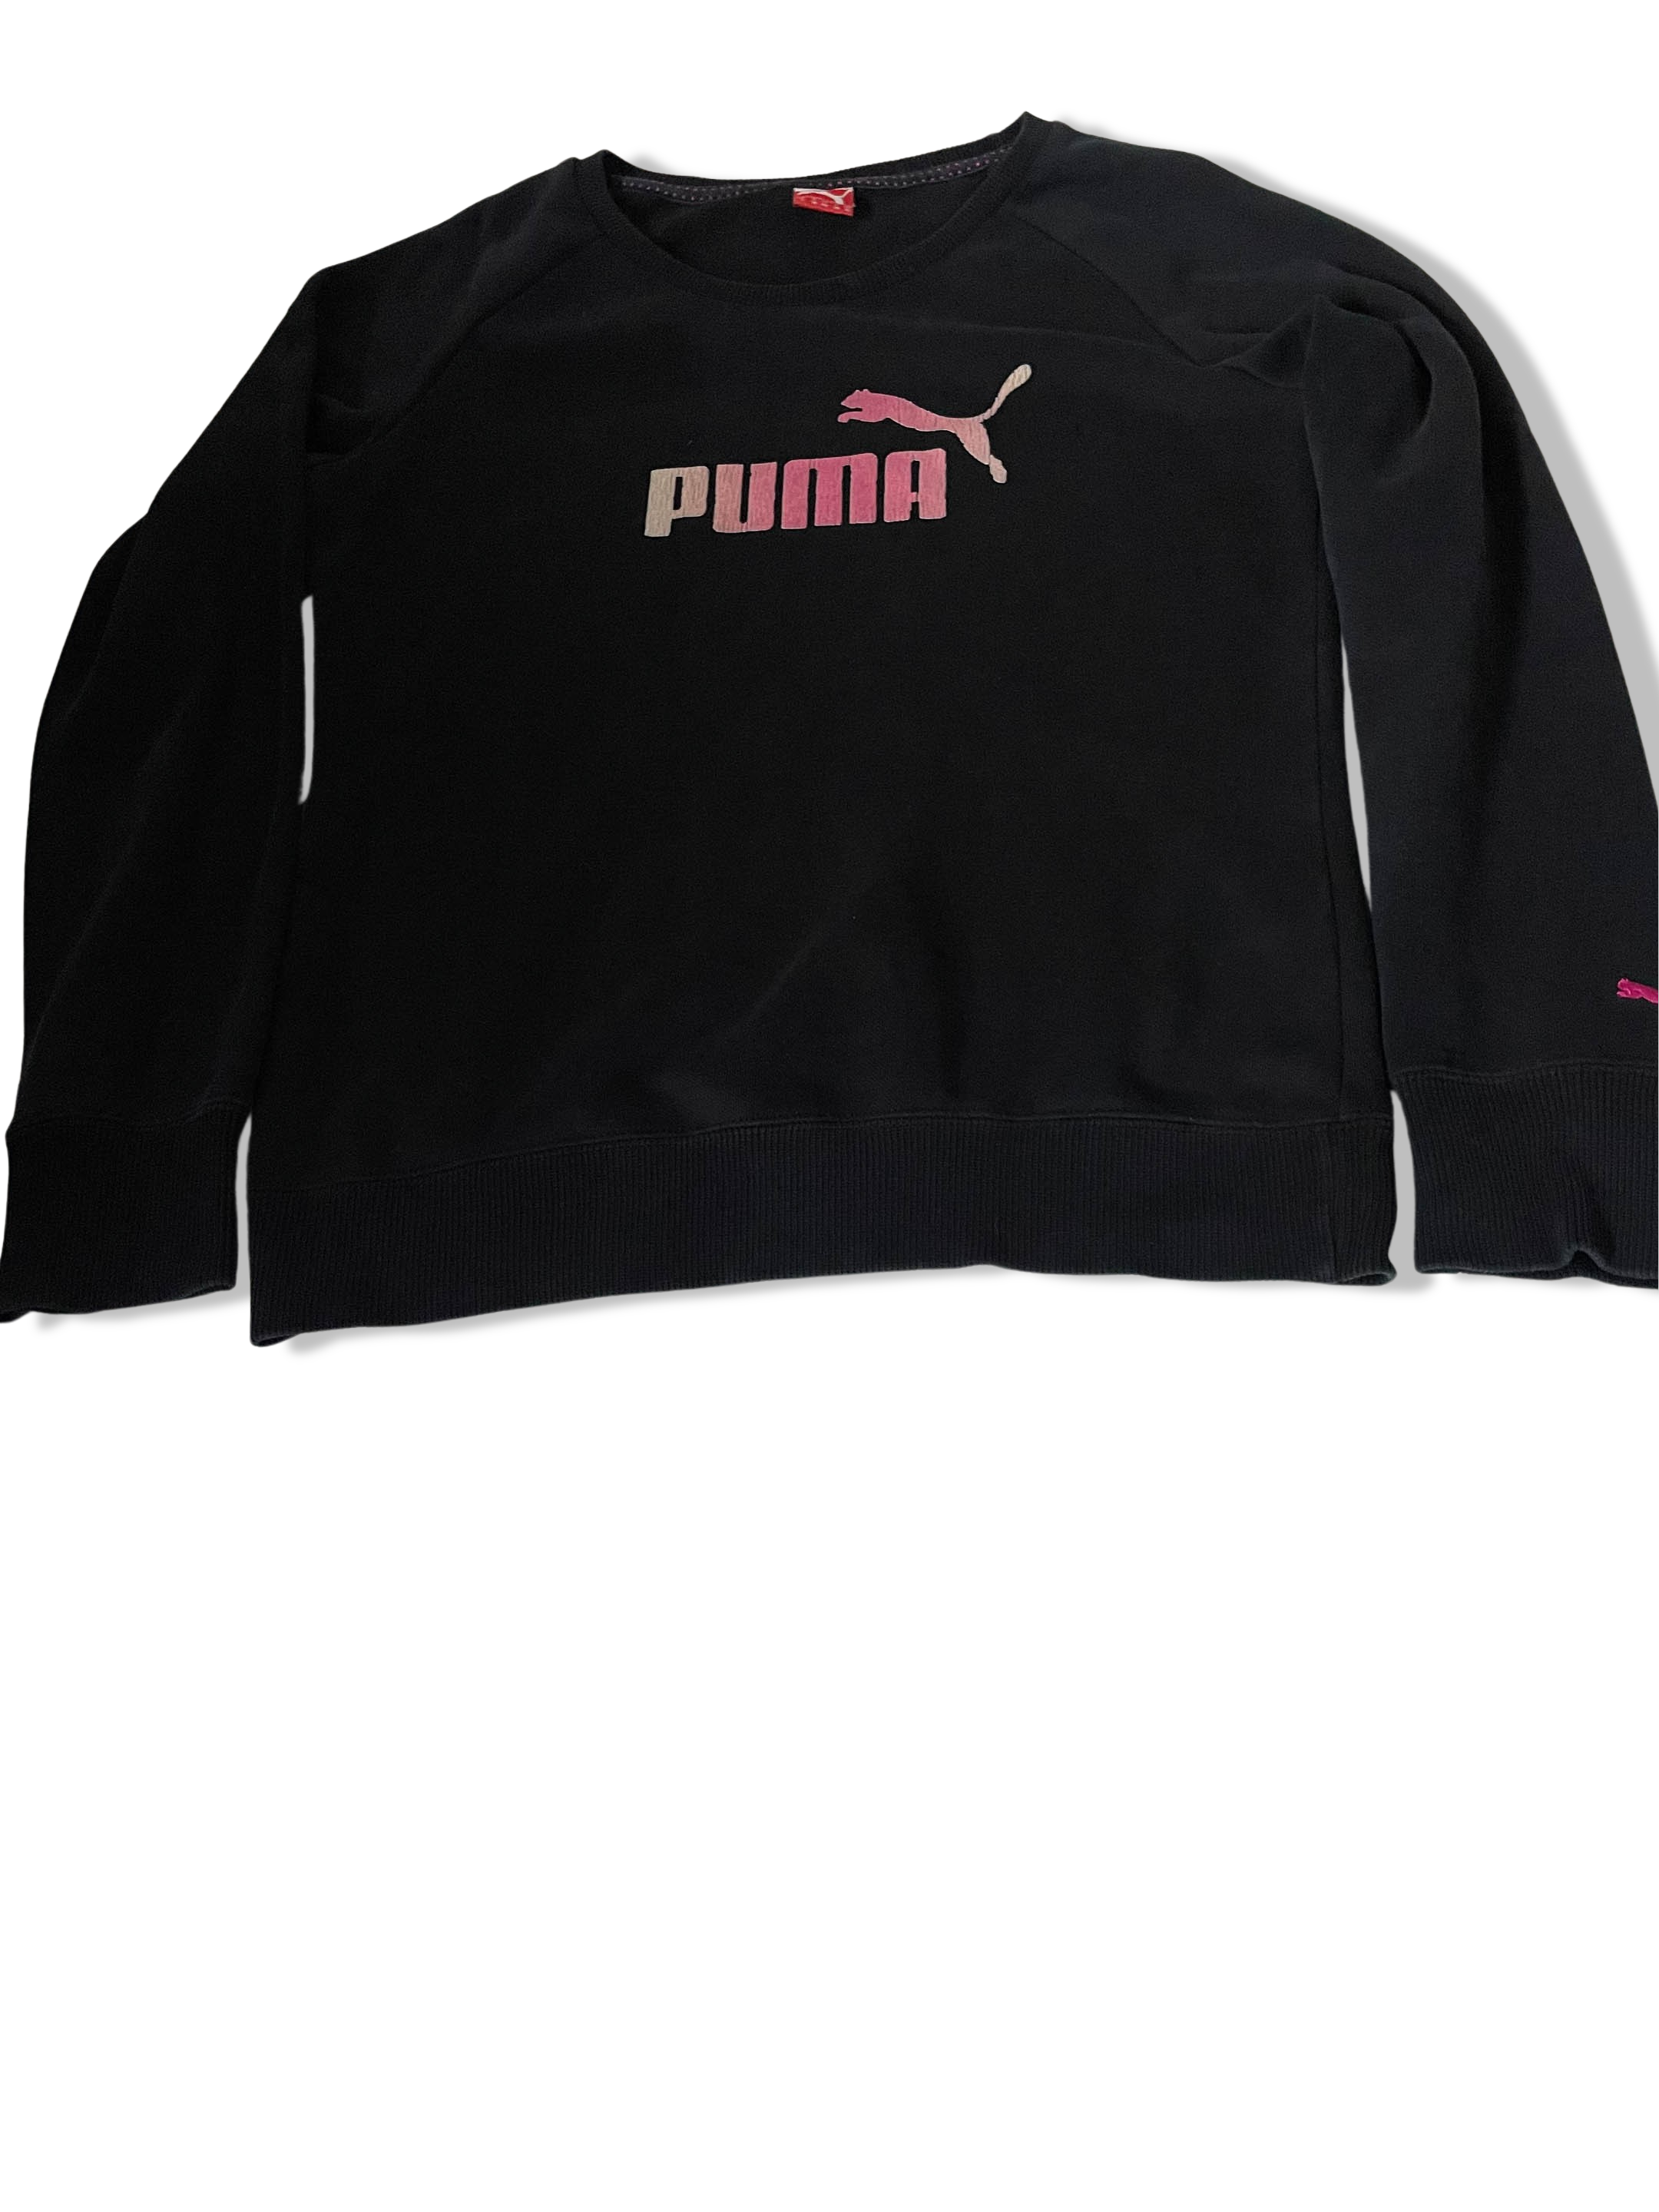 Vintage Black puma big logo print crew neck medium sweatshirt